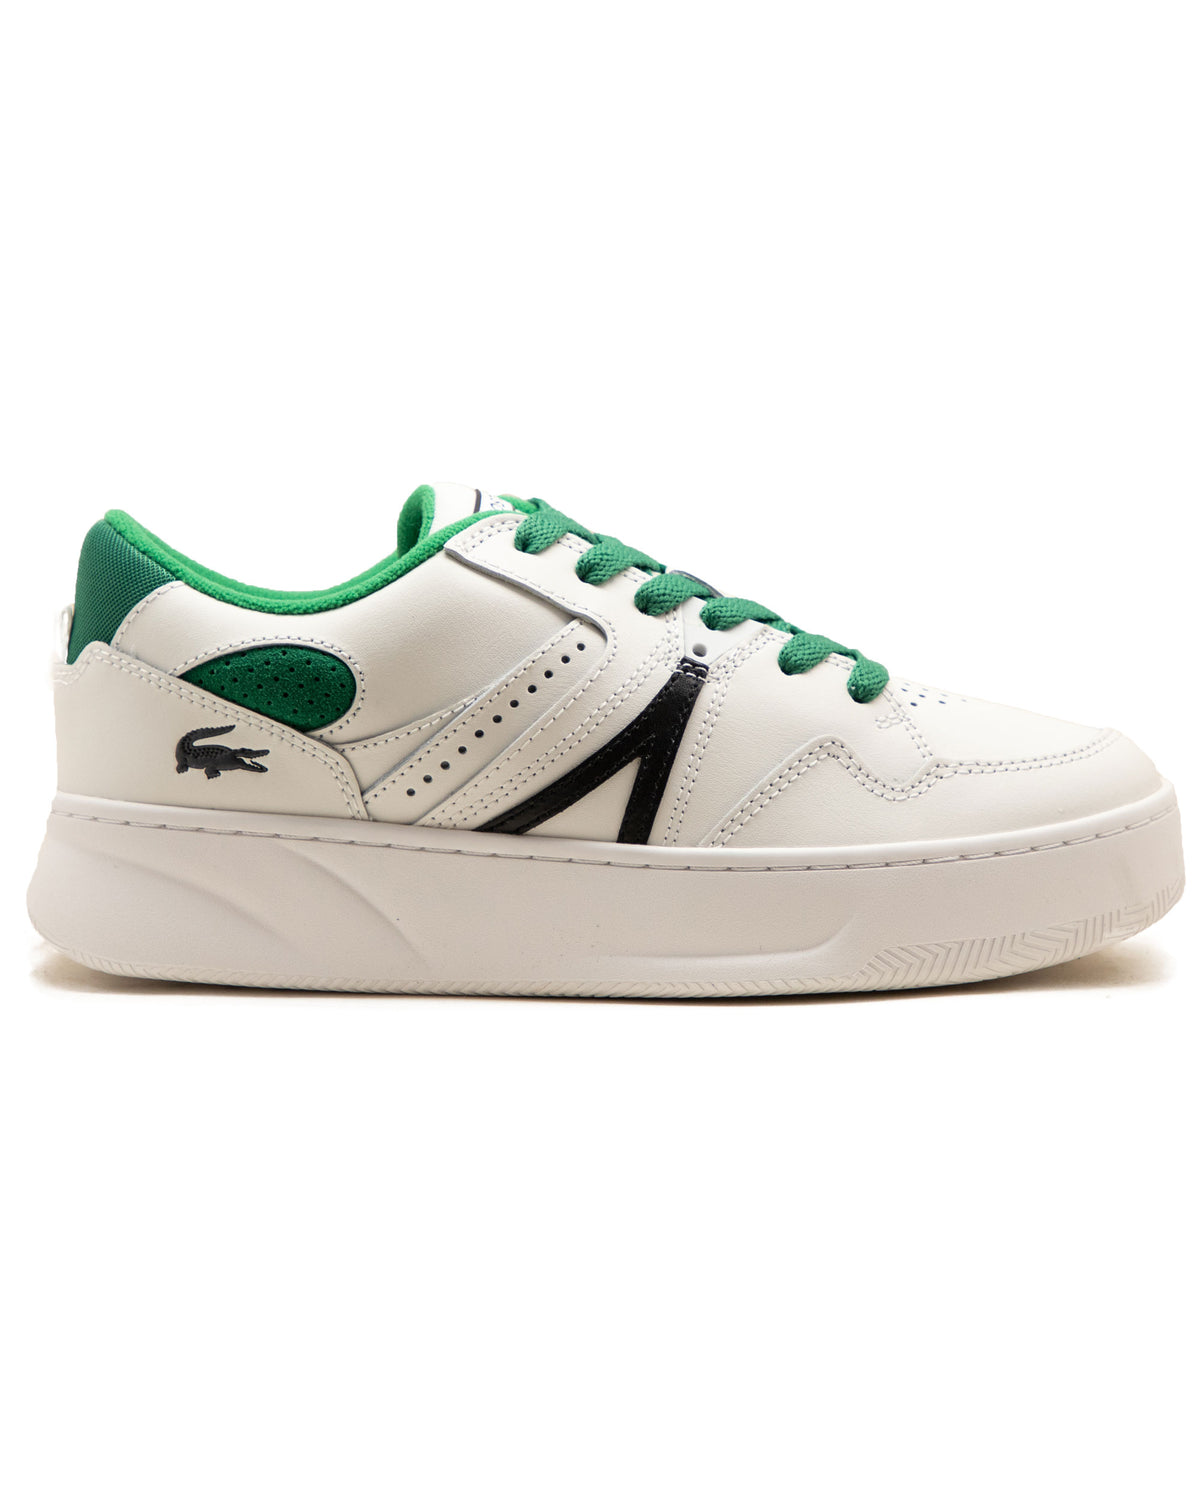 Sneakers Lacoste L005 222 SMA White Green